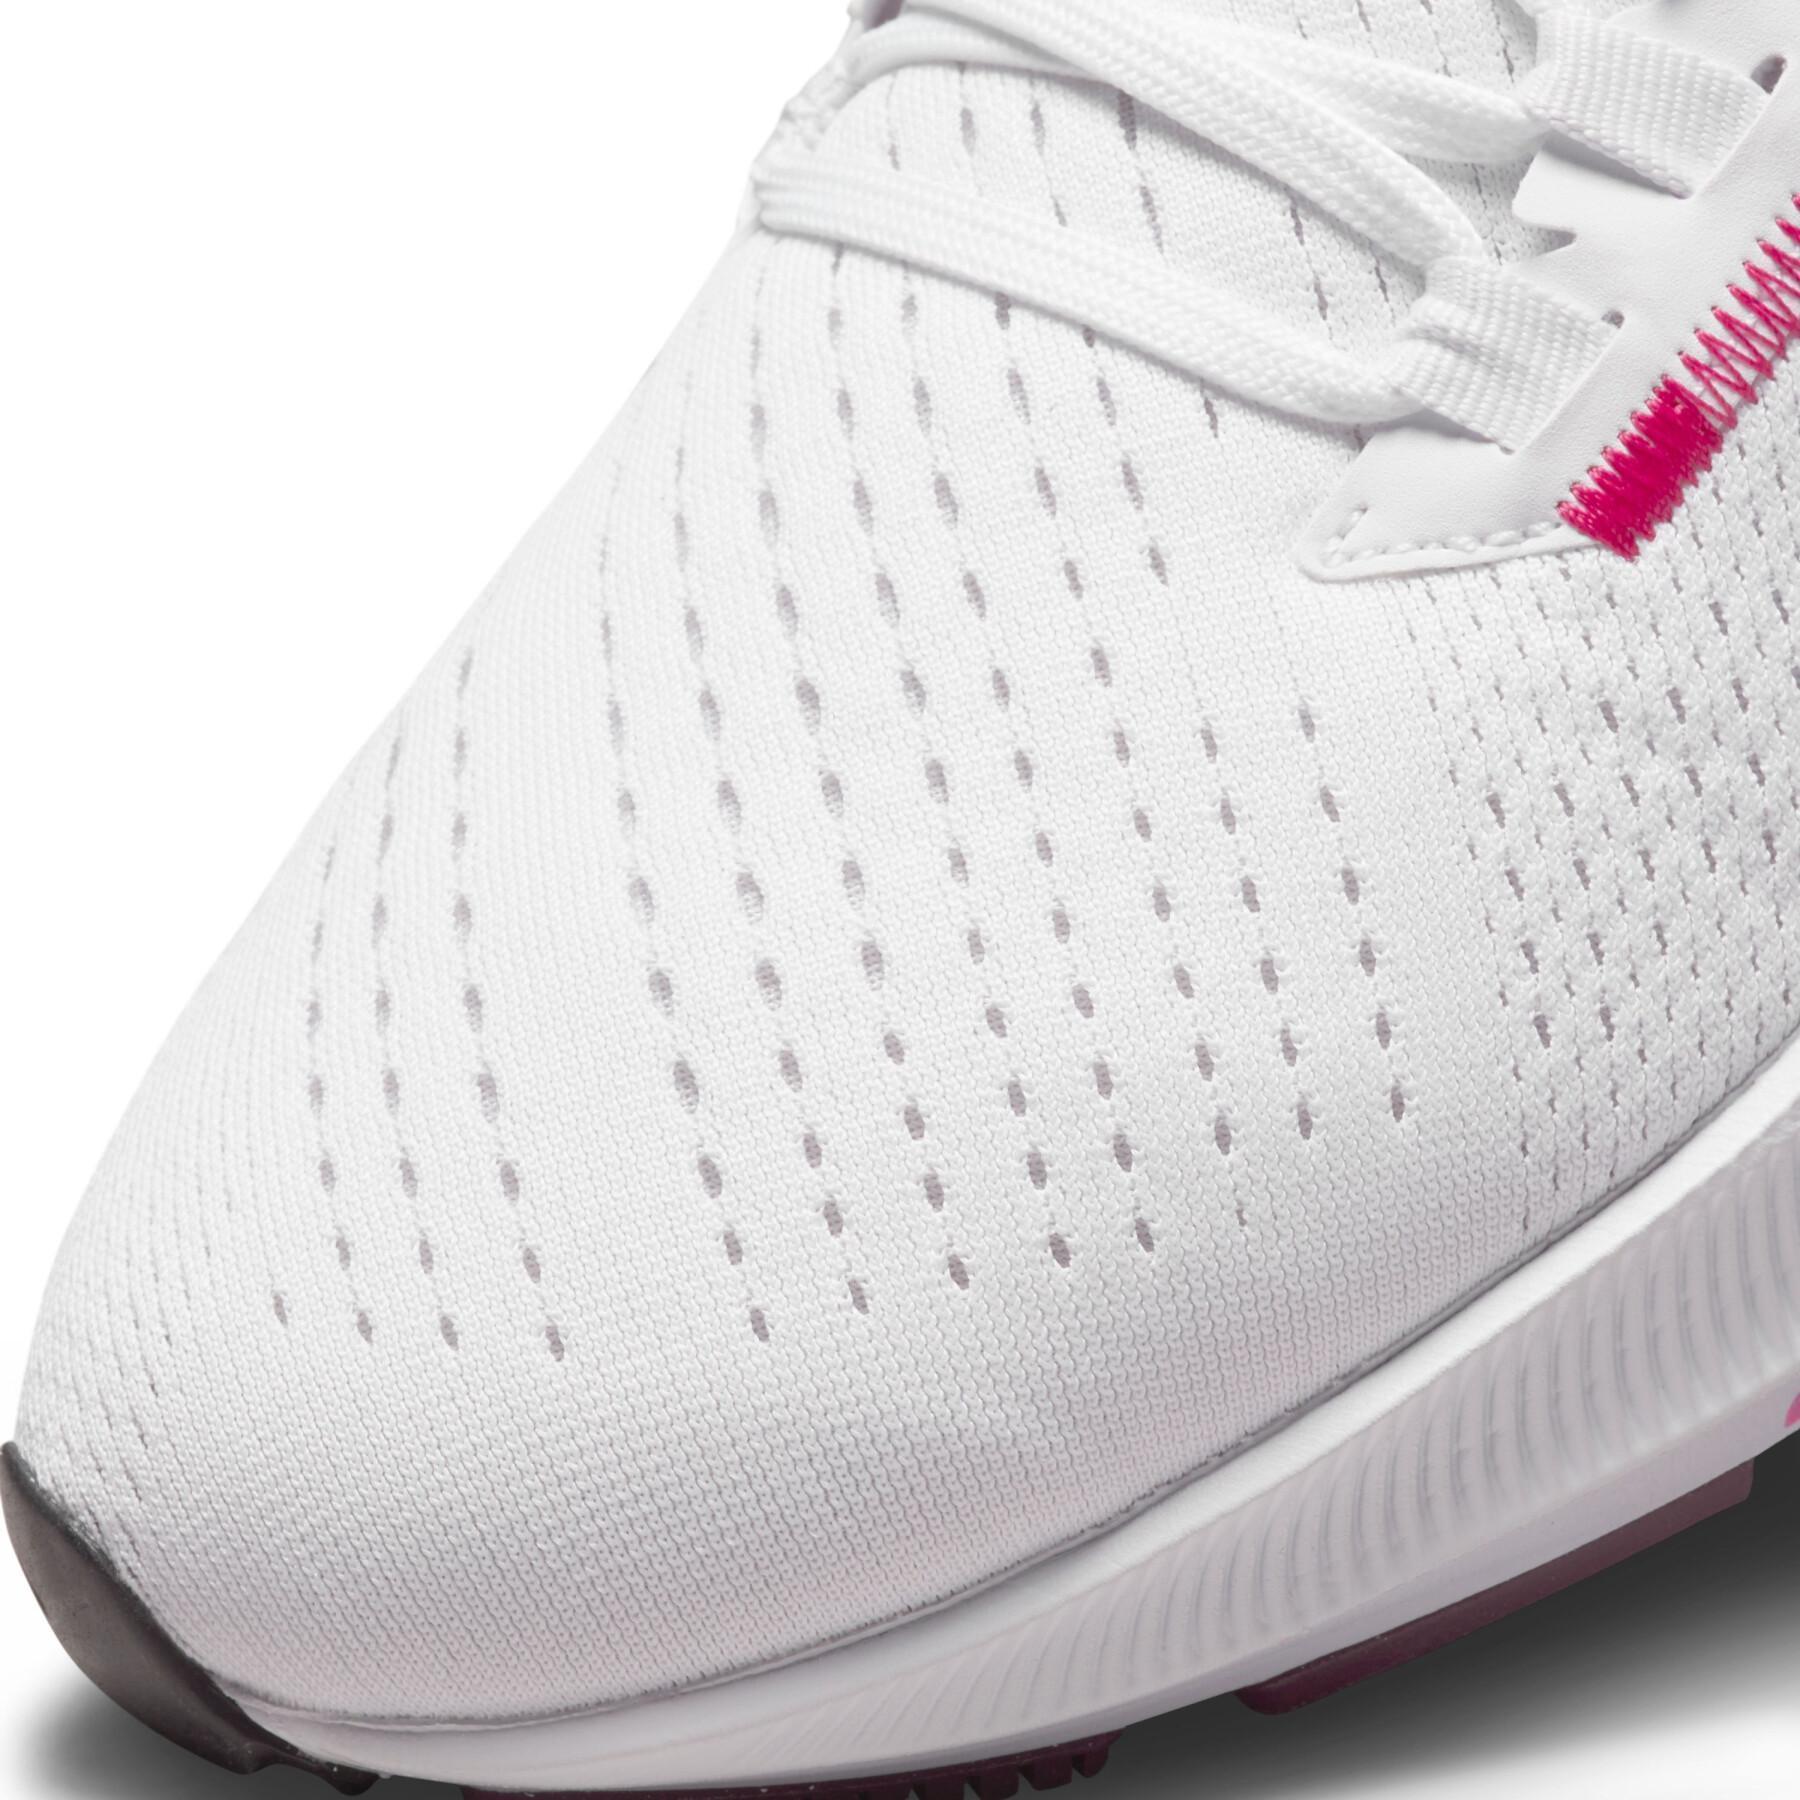 Buty do biegania dla kobiet Nike Air Zoom Pegasus 38